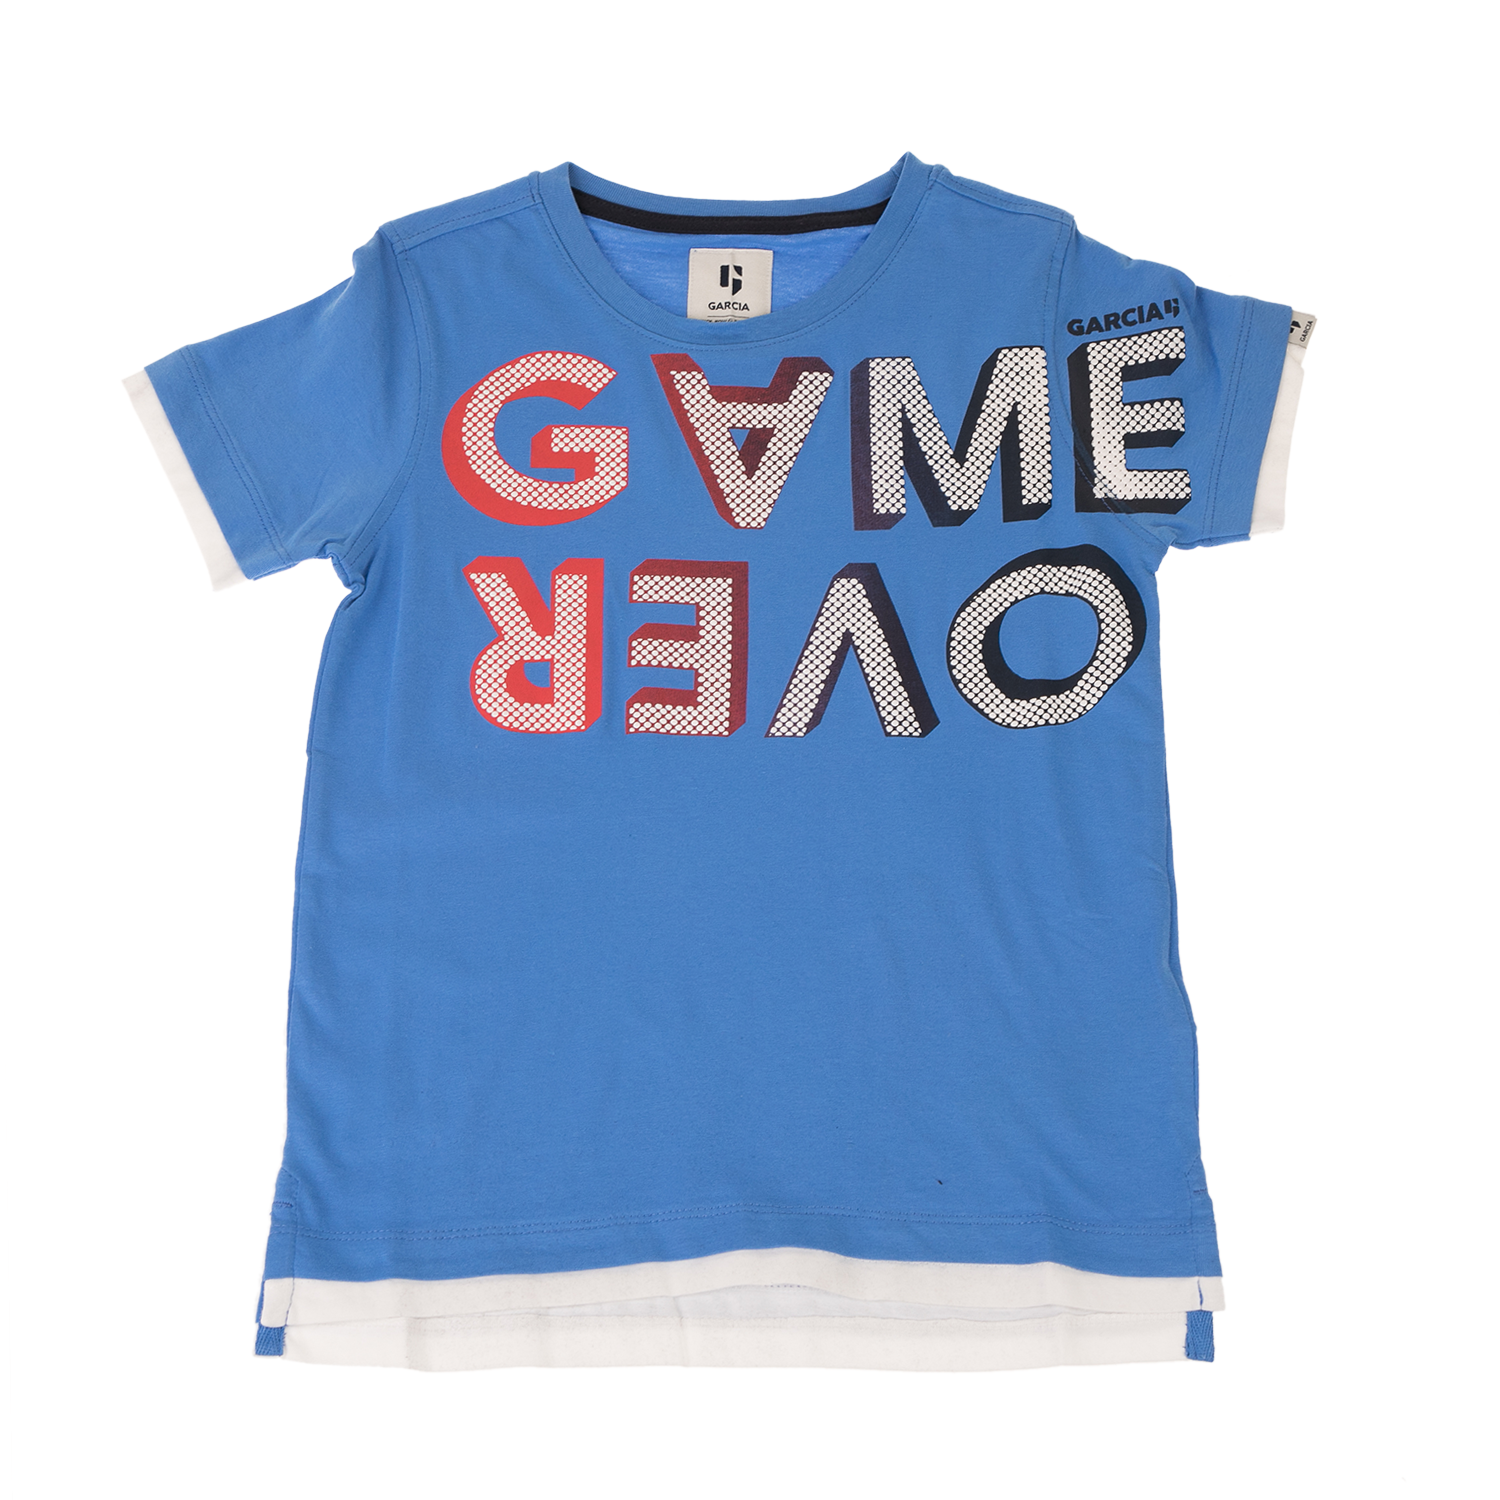 GARCIA JEANS - Παιδικό t-shirt για αγόρια GARCIA JEANS μπλε Παιδικά/Boys/Ρούχα/Μπλούζες Κοντομάνικες-Αμάνικες